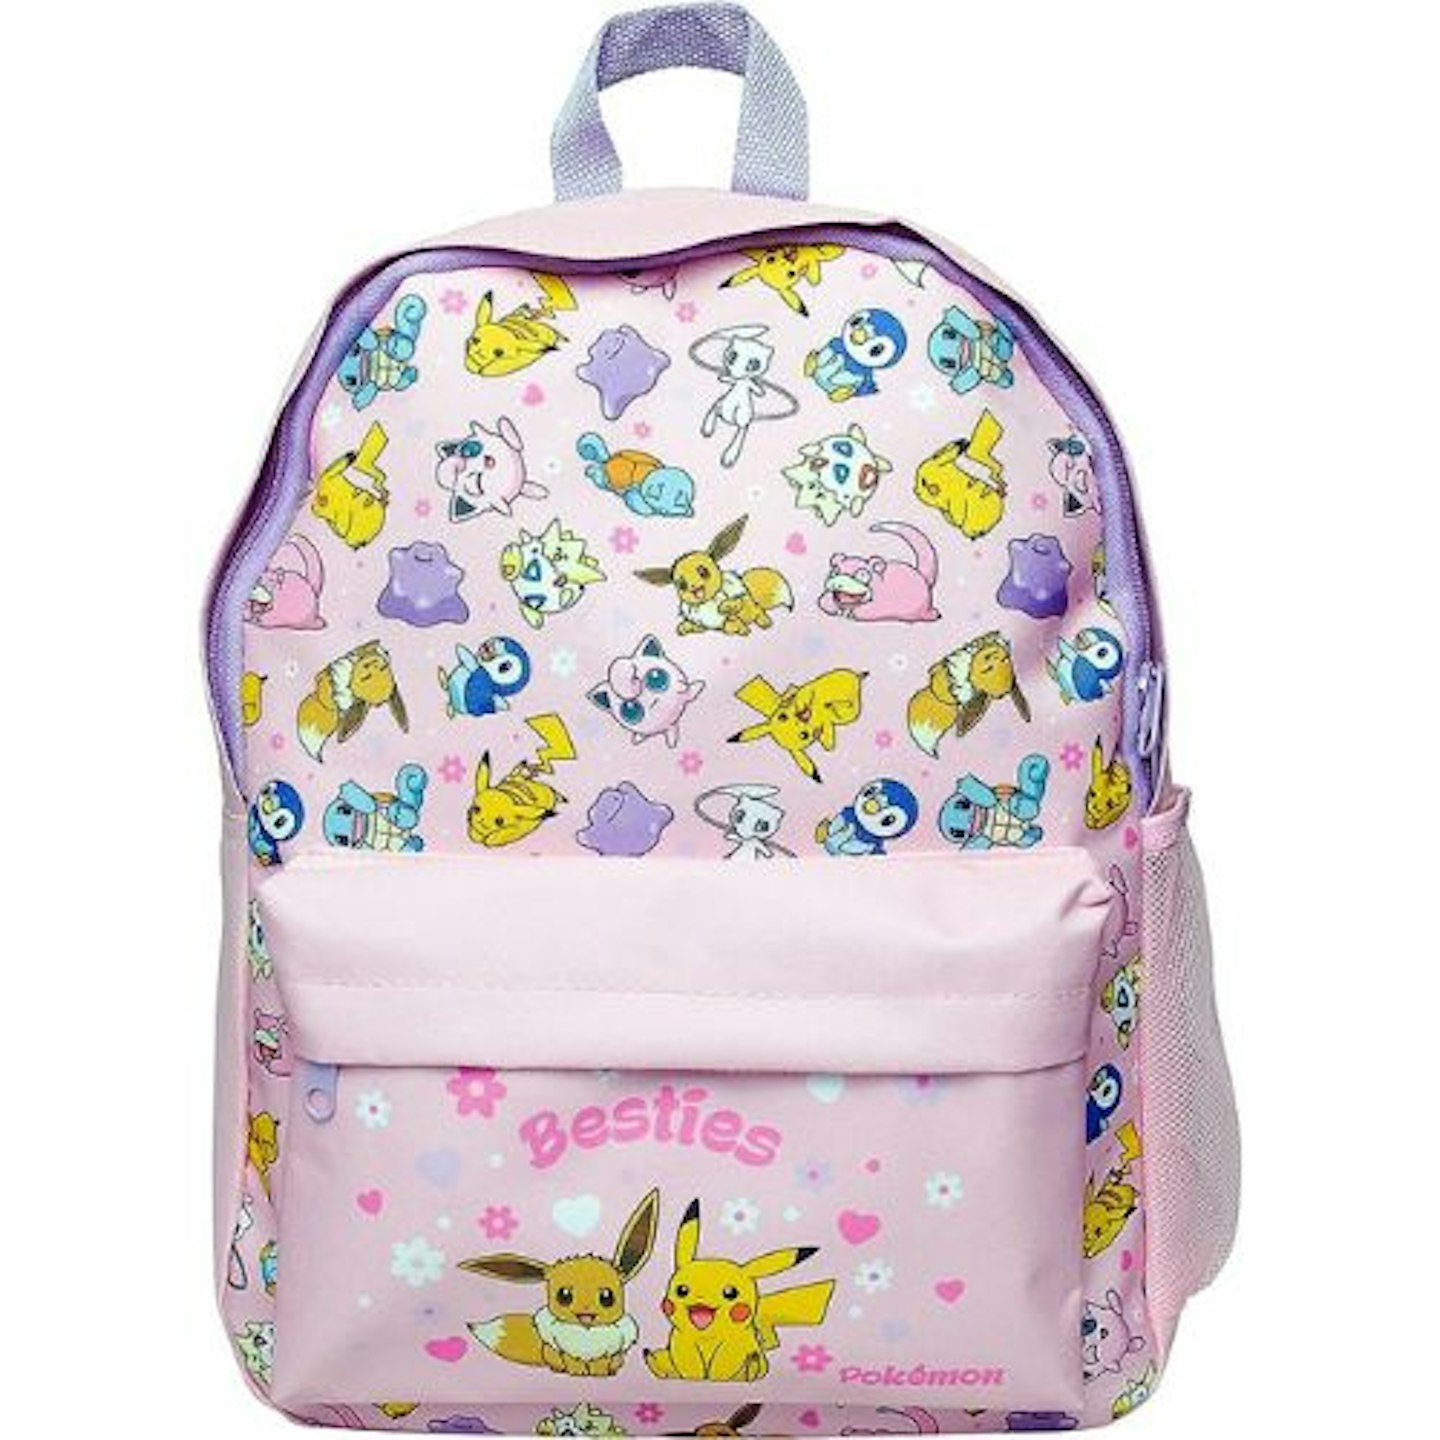 Best back to school backpacks Pokemon Besties Backpack